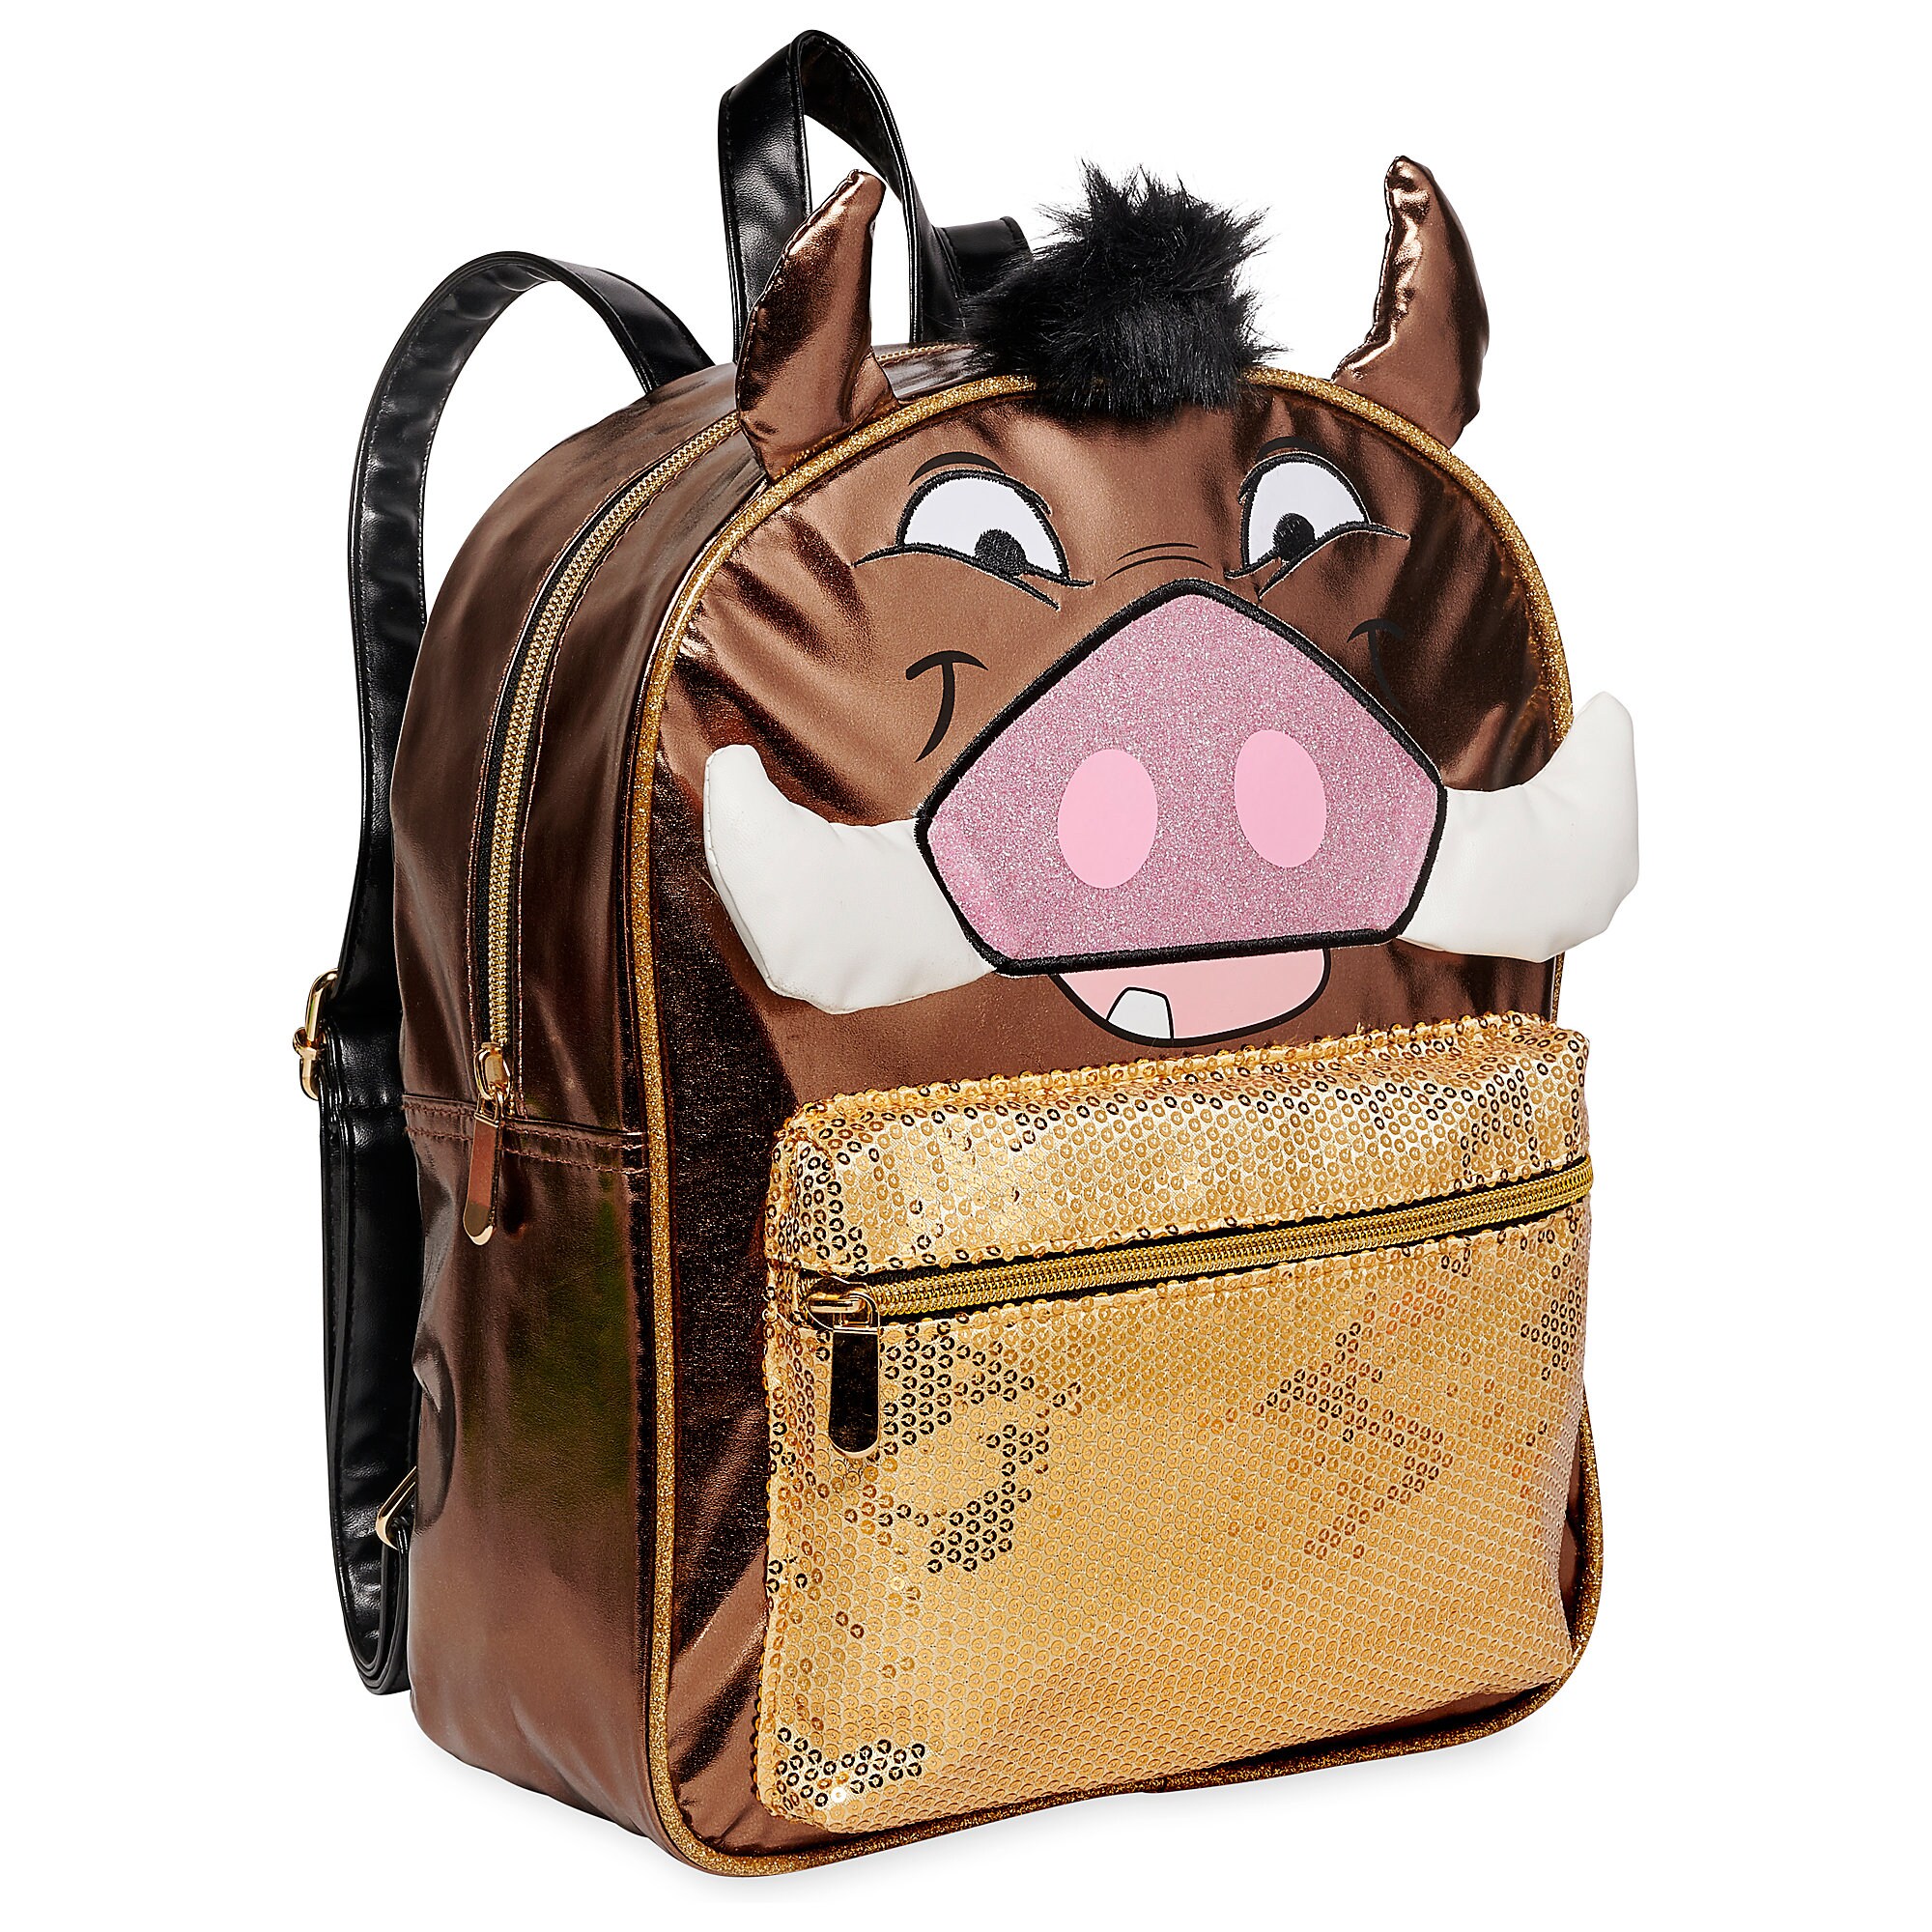 Pumbaa Fashion Backpack - The Lion King